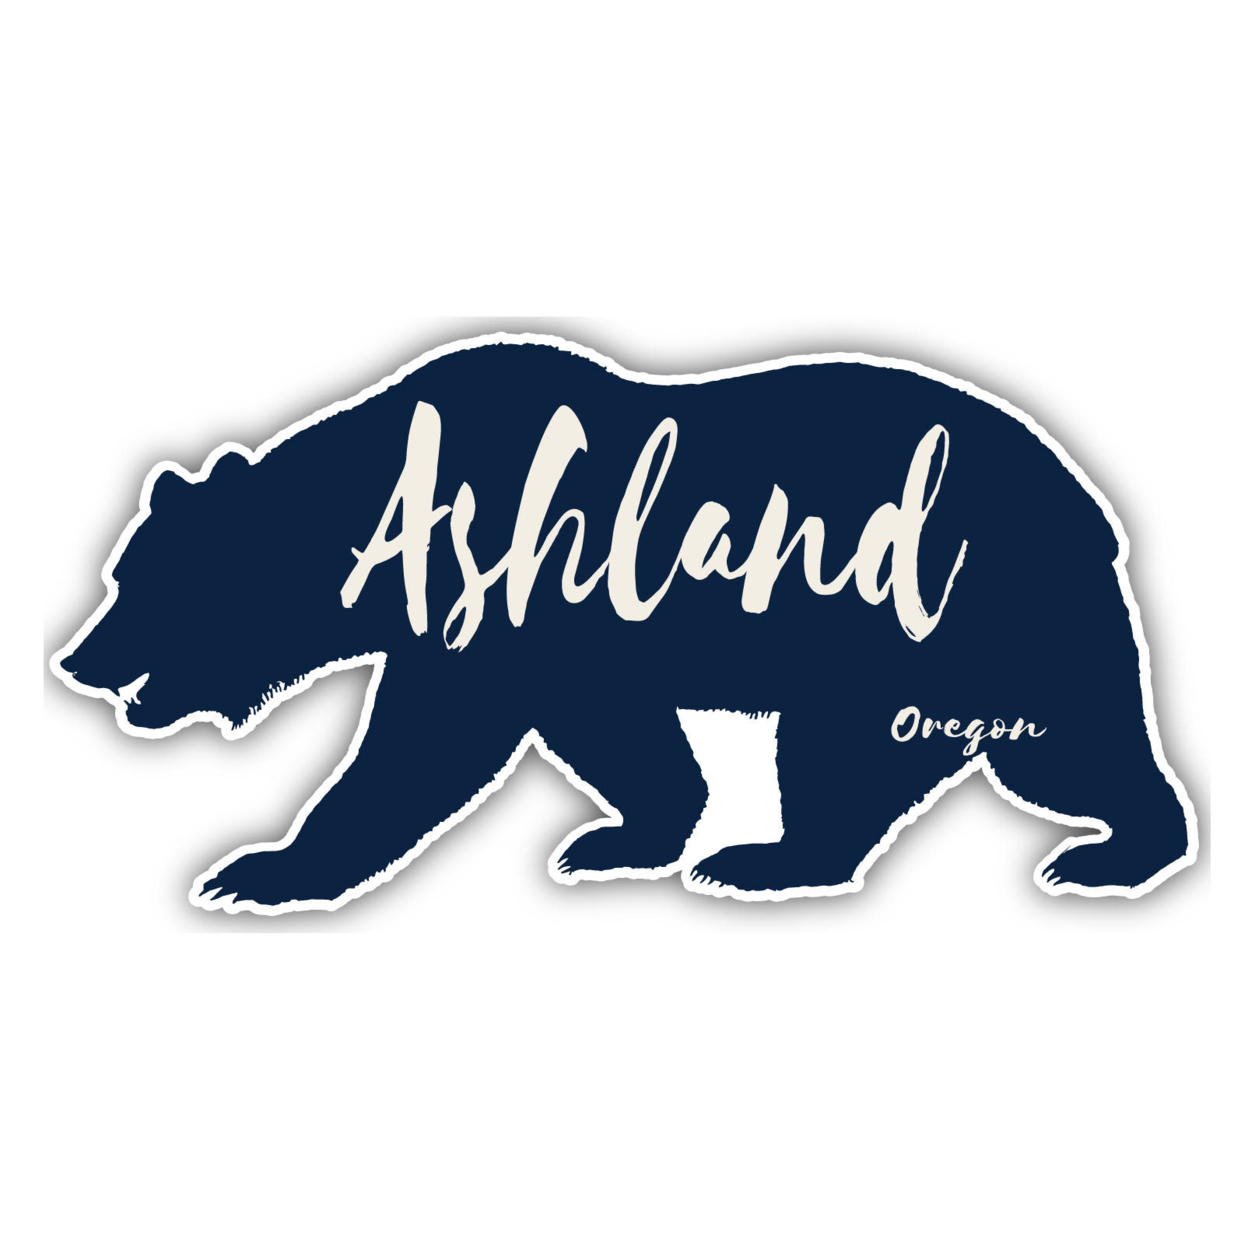 Ashland Oregon Souvenir Decorative Stickers (Choose Theme And Size) - 4-Pack, 10-Inch, Camp Life